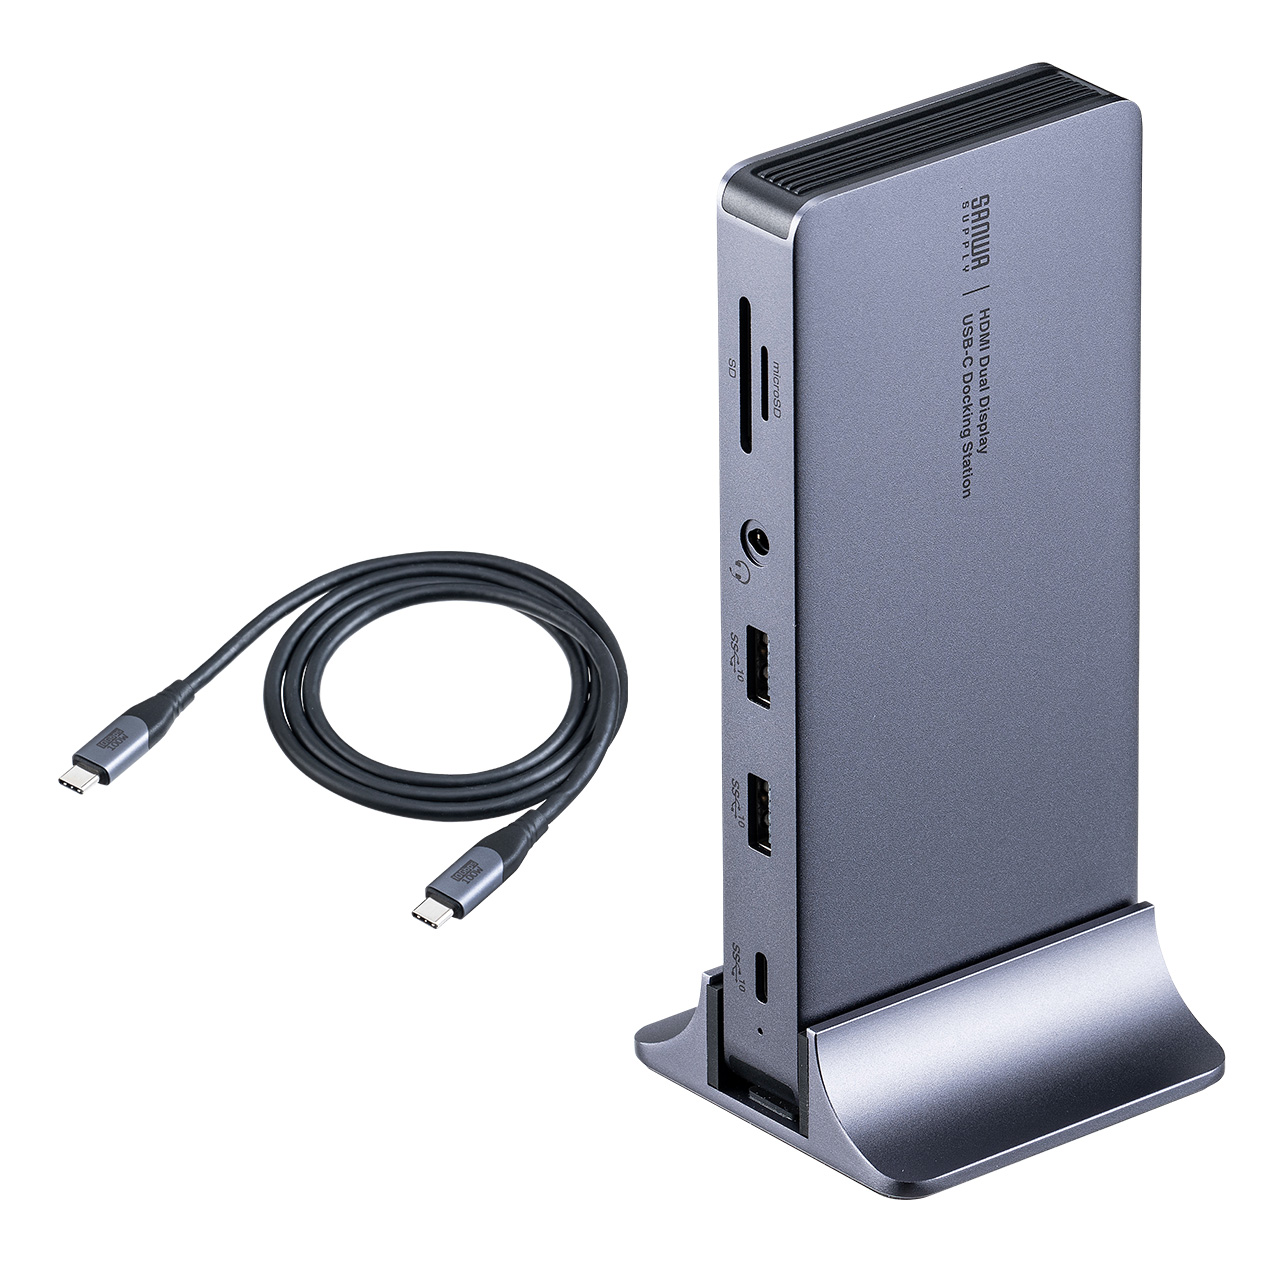 hbLOXe[V HDMI2 2ʏo͑Ή USB-Cڑ c^X^ht 4K/60HzΉ A~ 400-VGA025